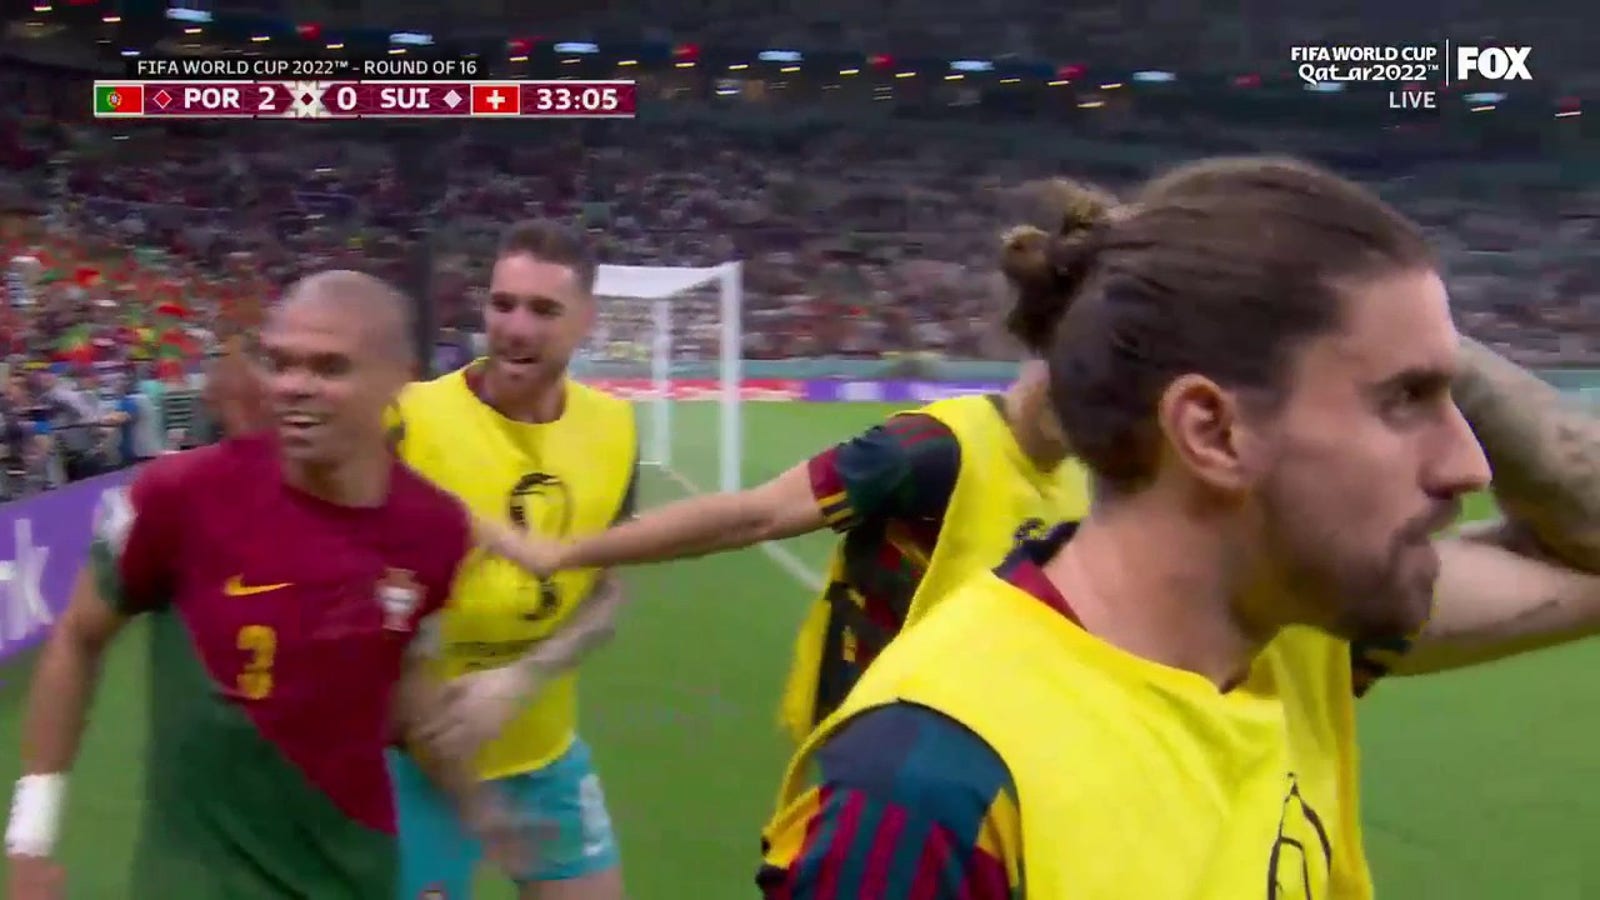 Portugal's Pepe scores goal vs. Switzerland in 33'